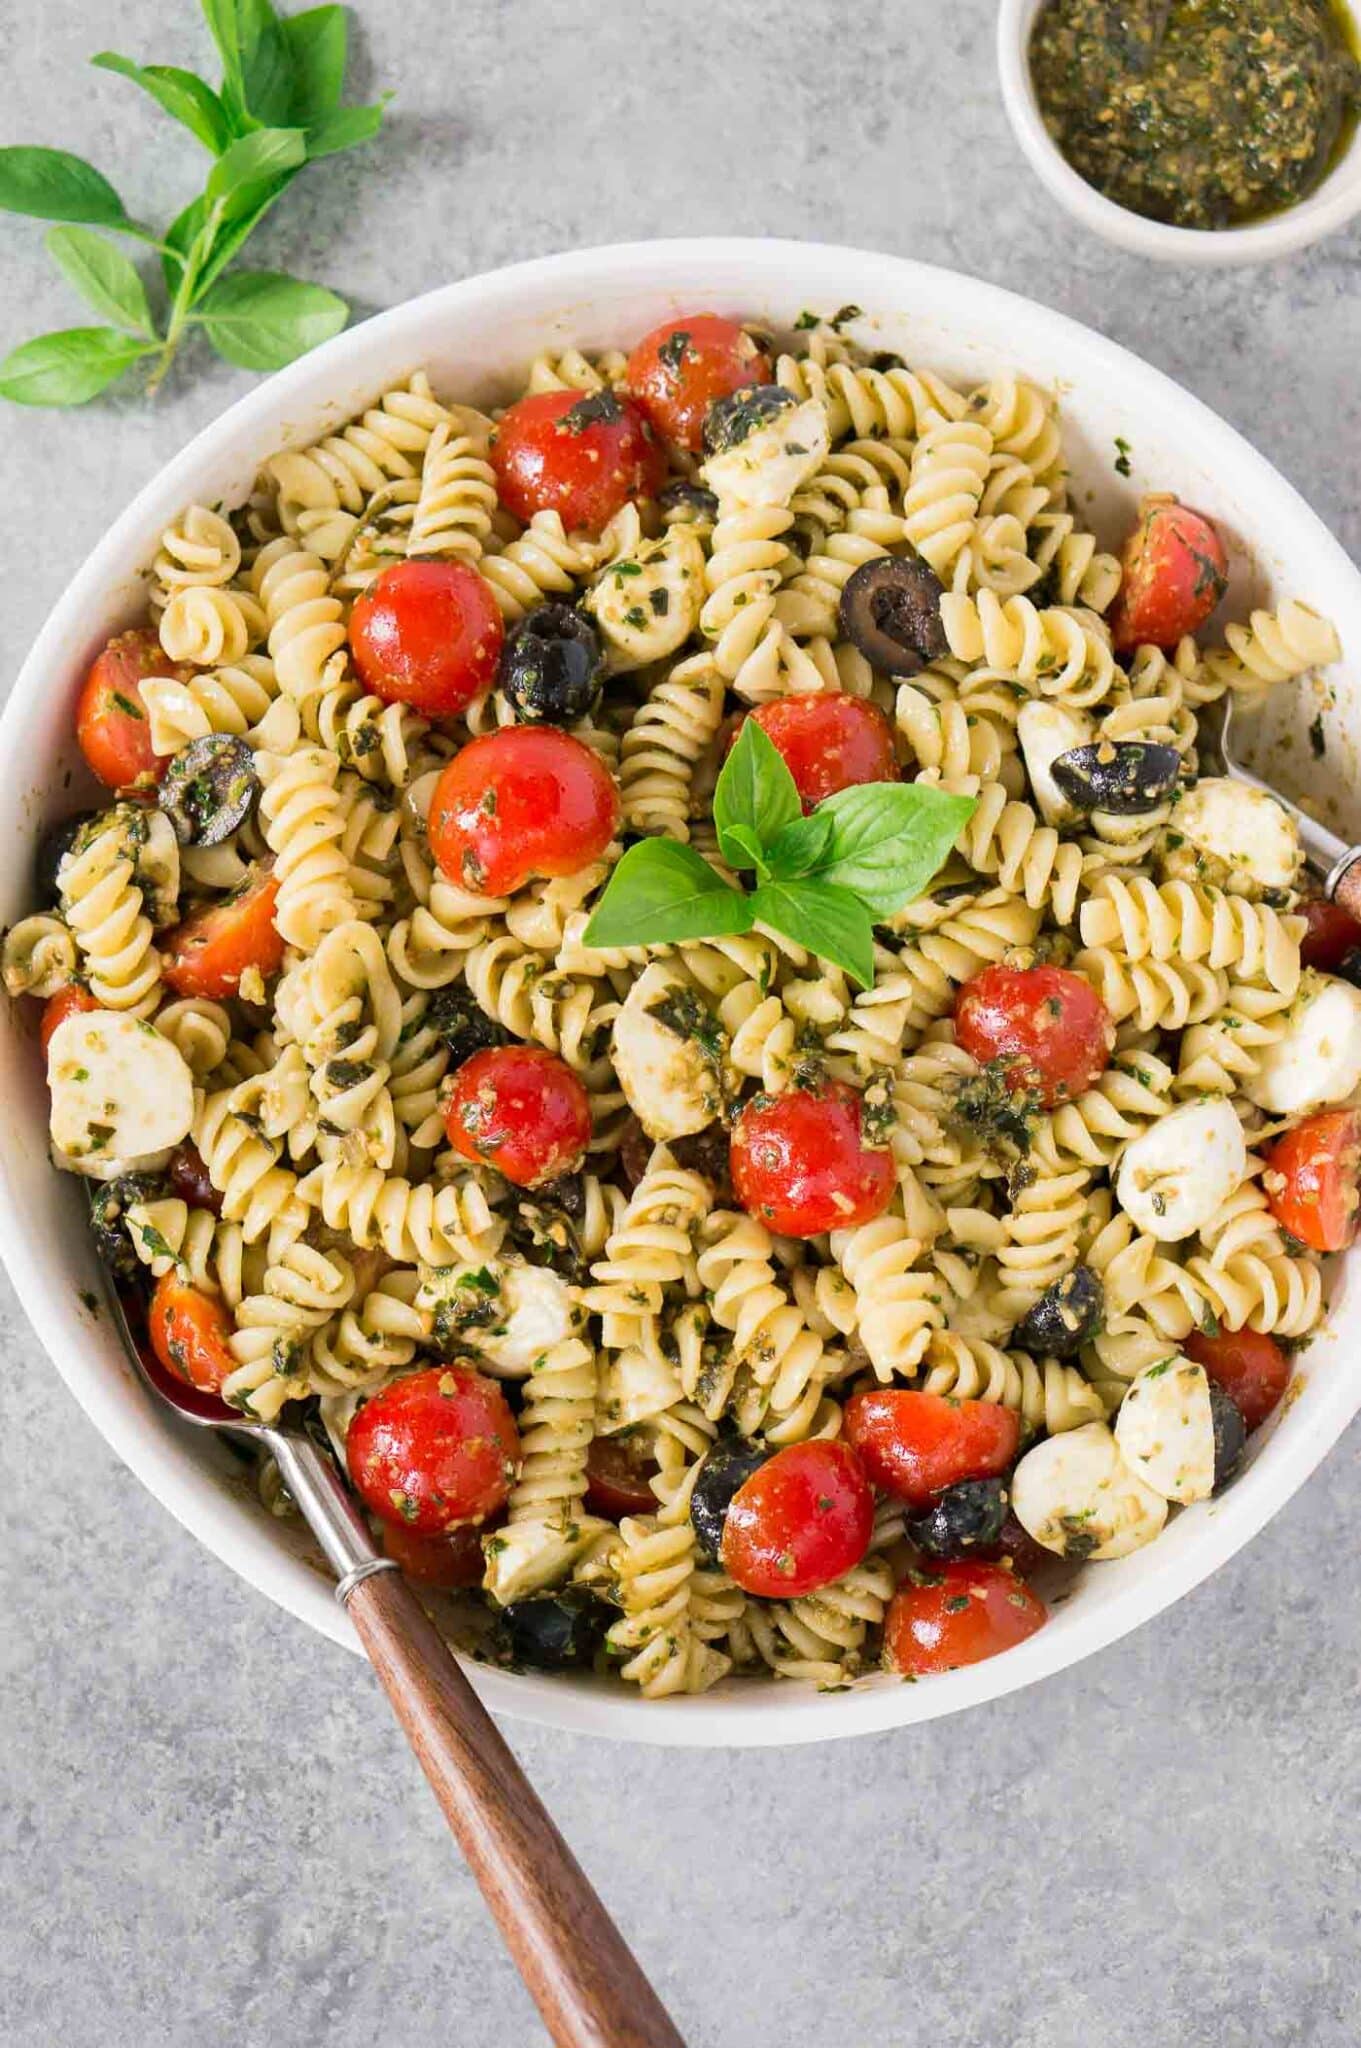 Pesto pasta salad in a bowl